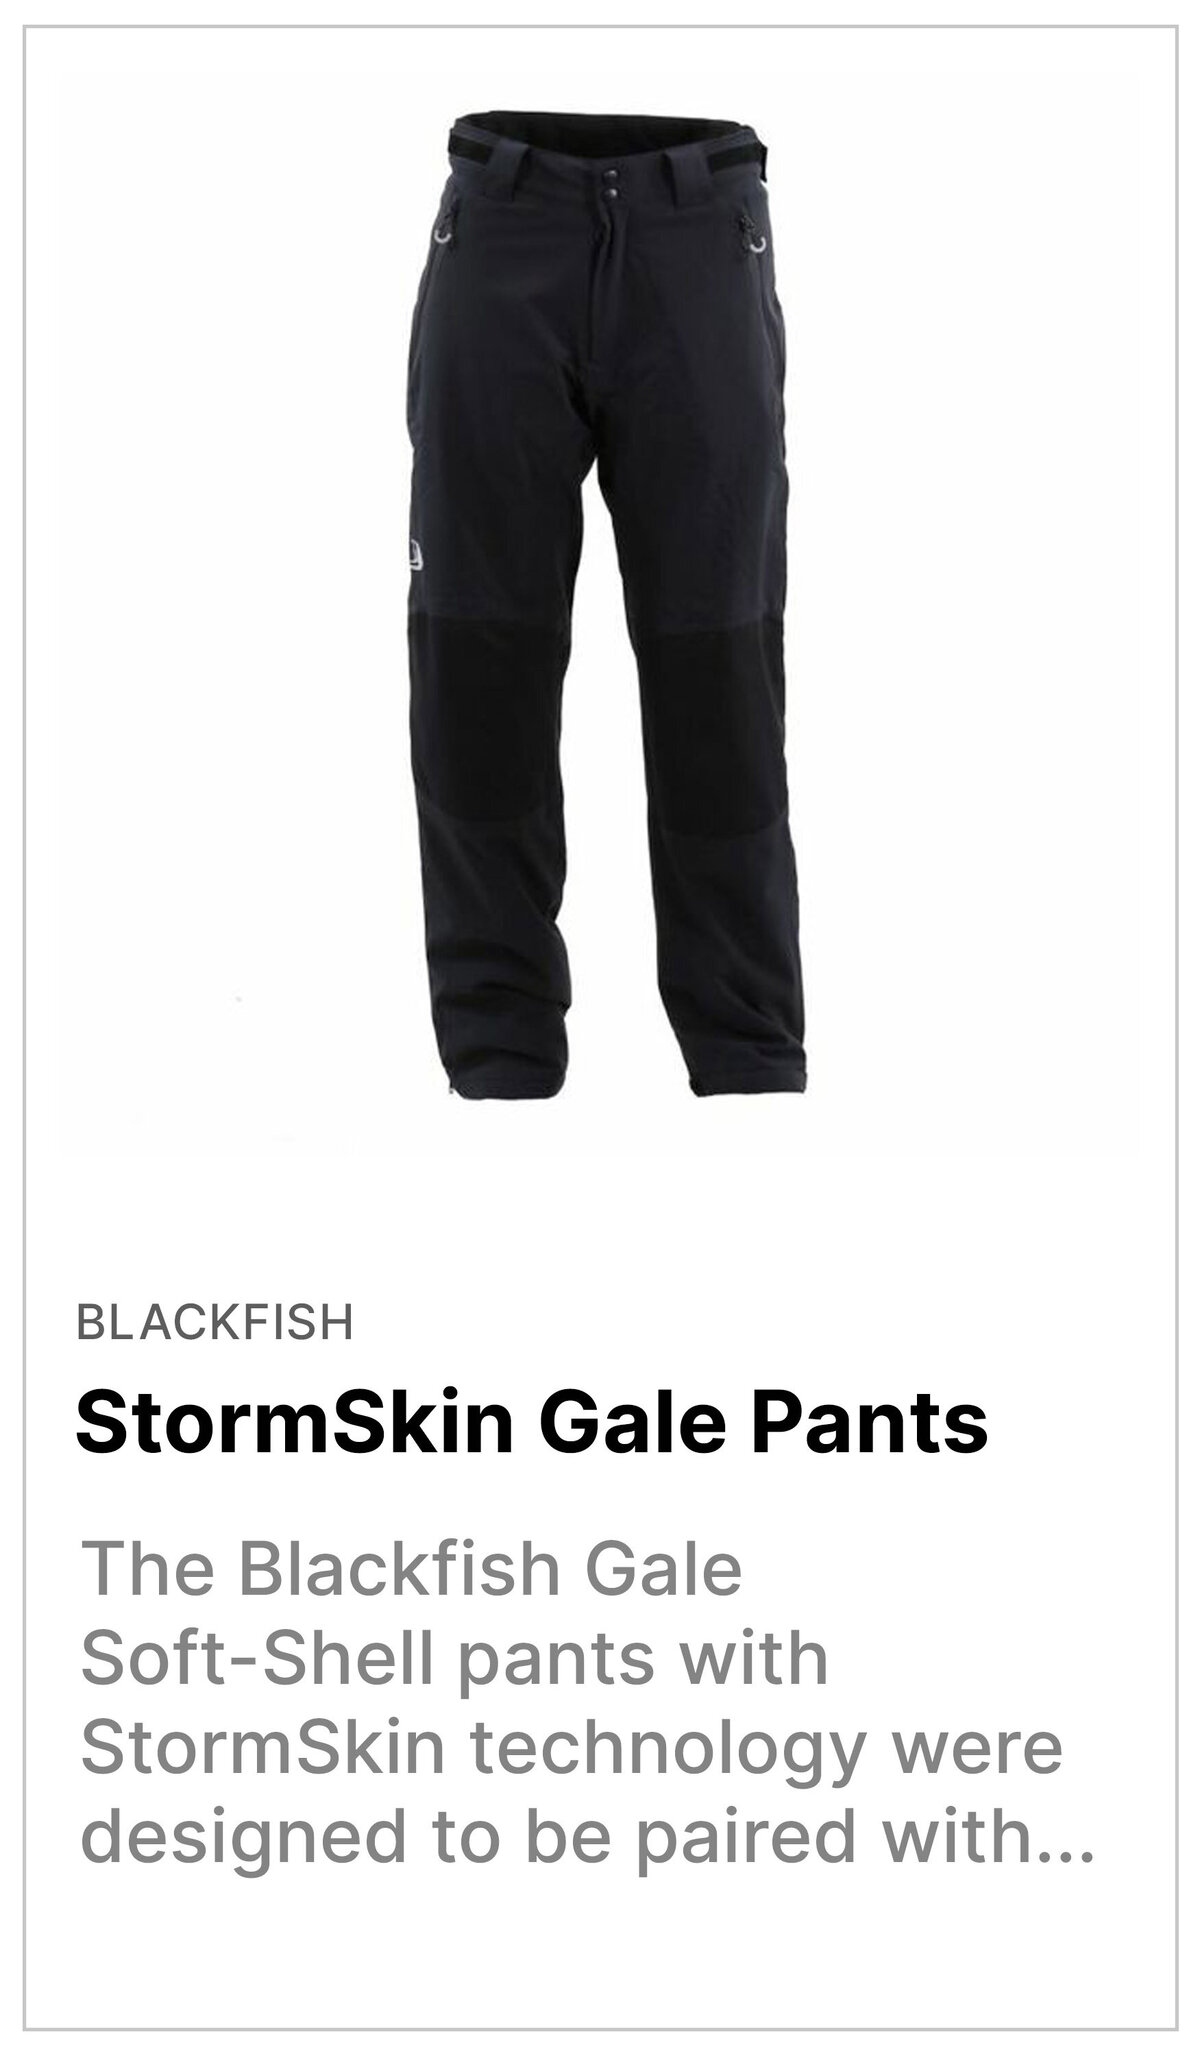 Blackfish StormSkin Gale Pants